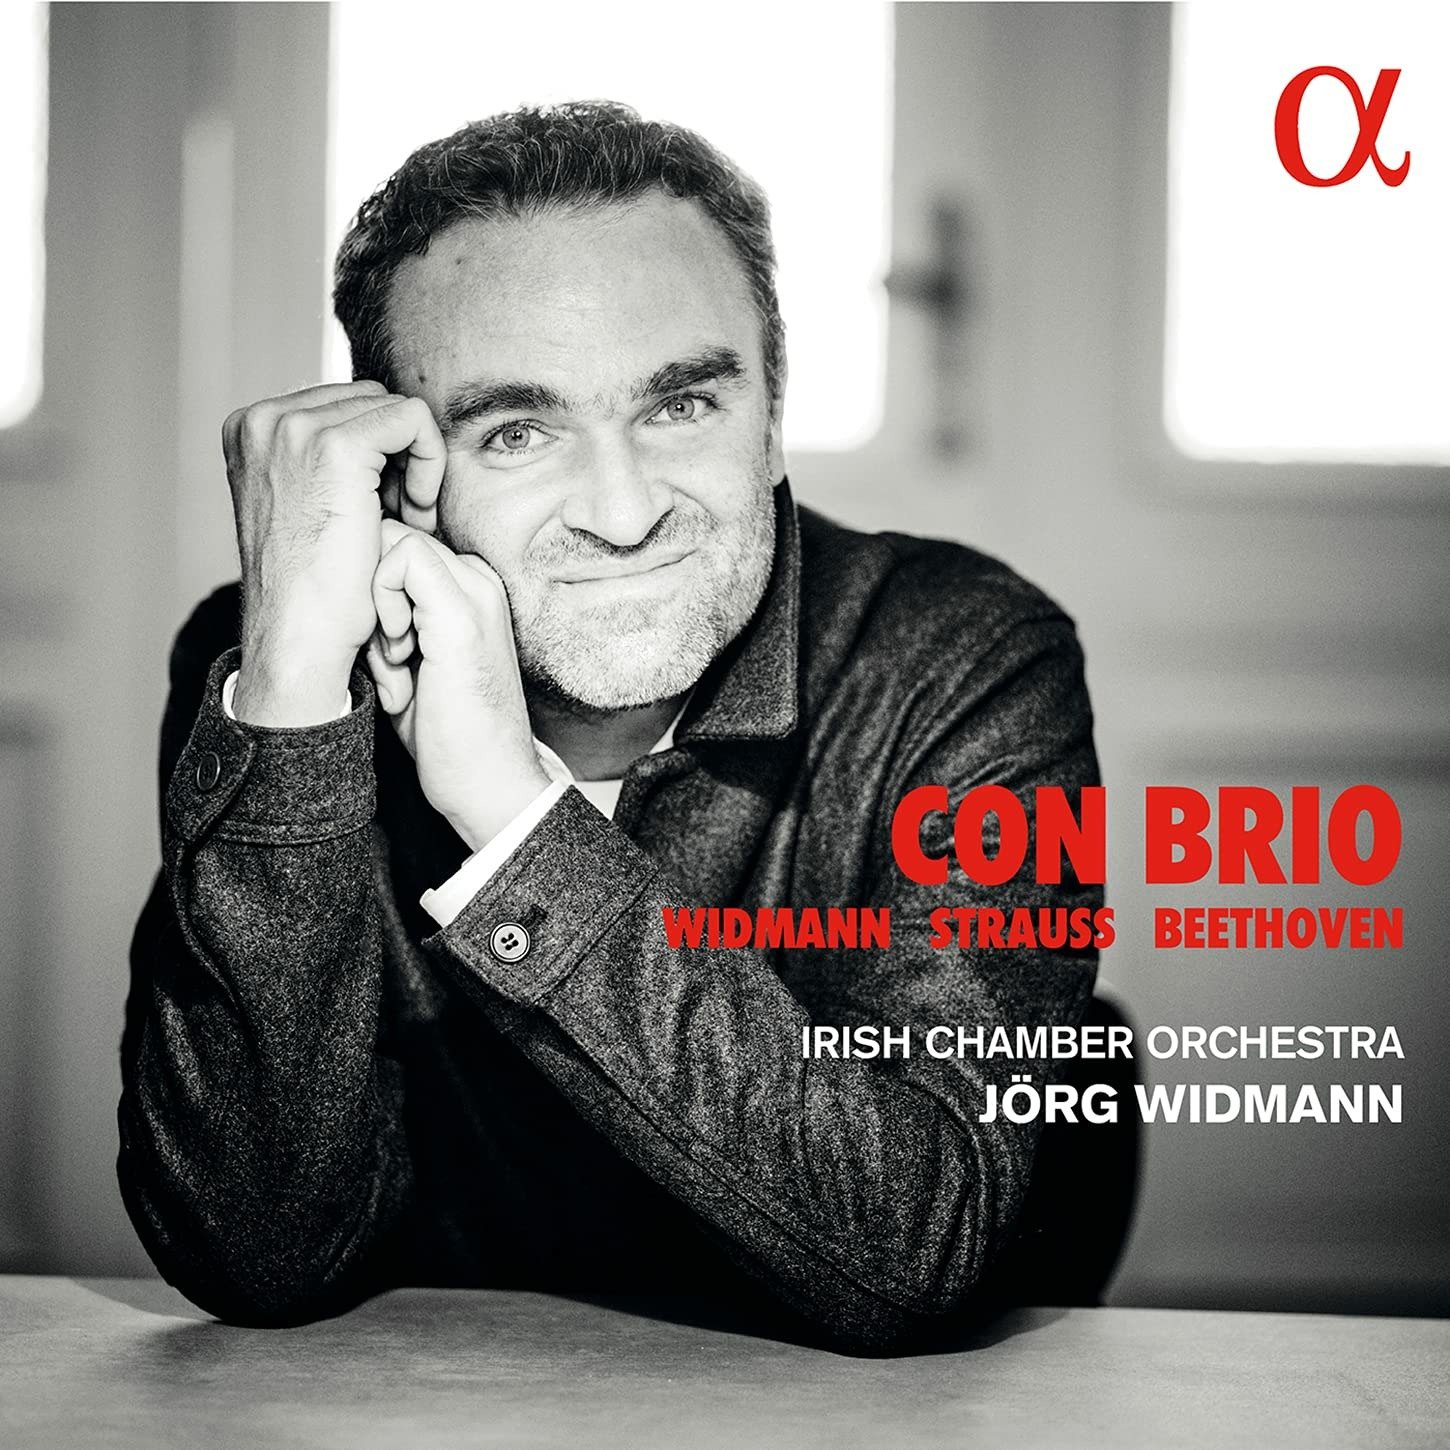 CD Shop - WIDMANN, JORG WIDMANN, STRAUSS & BEETHOVEN: CON BRIO